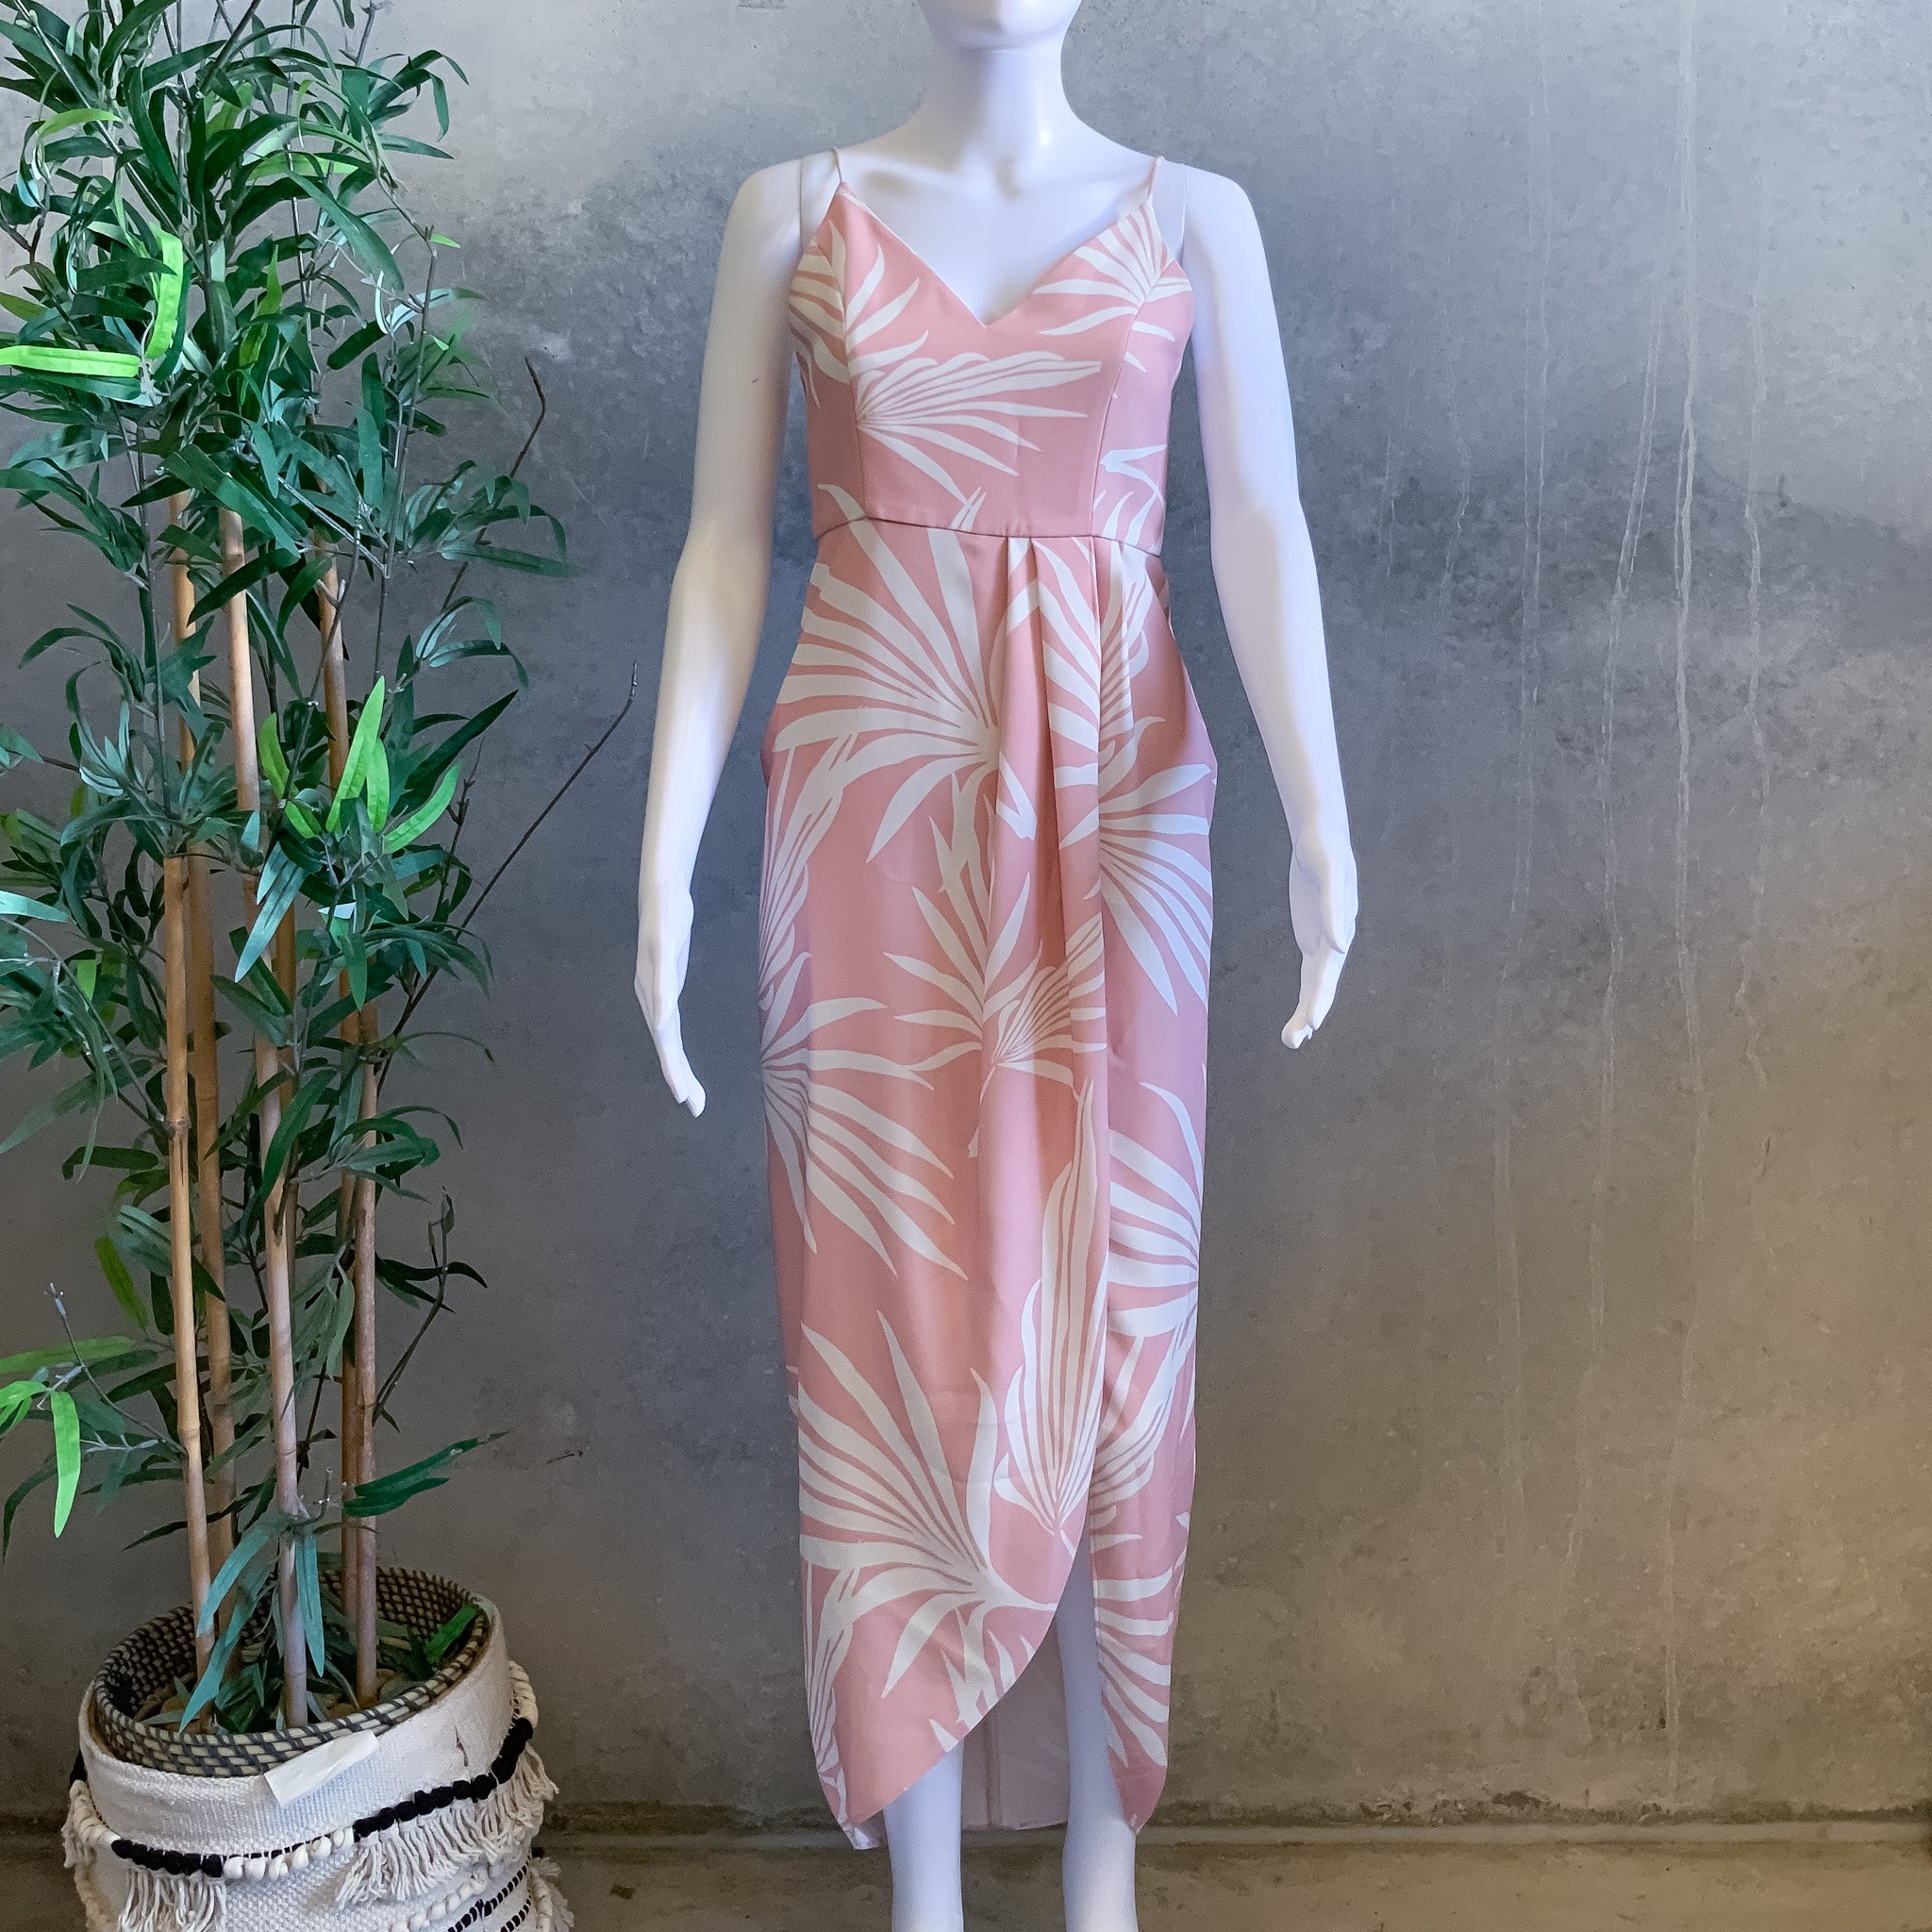 GRACE WILLOW Womens Pink Palm Print Cross Front Dress - Size 8